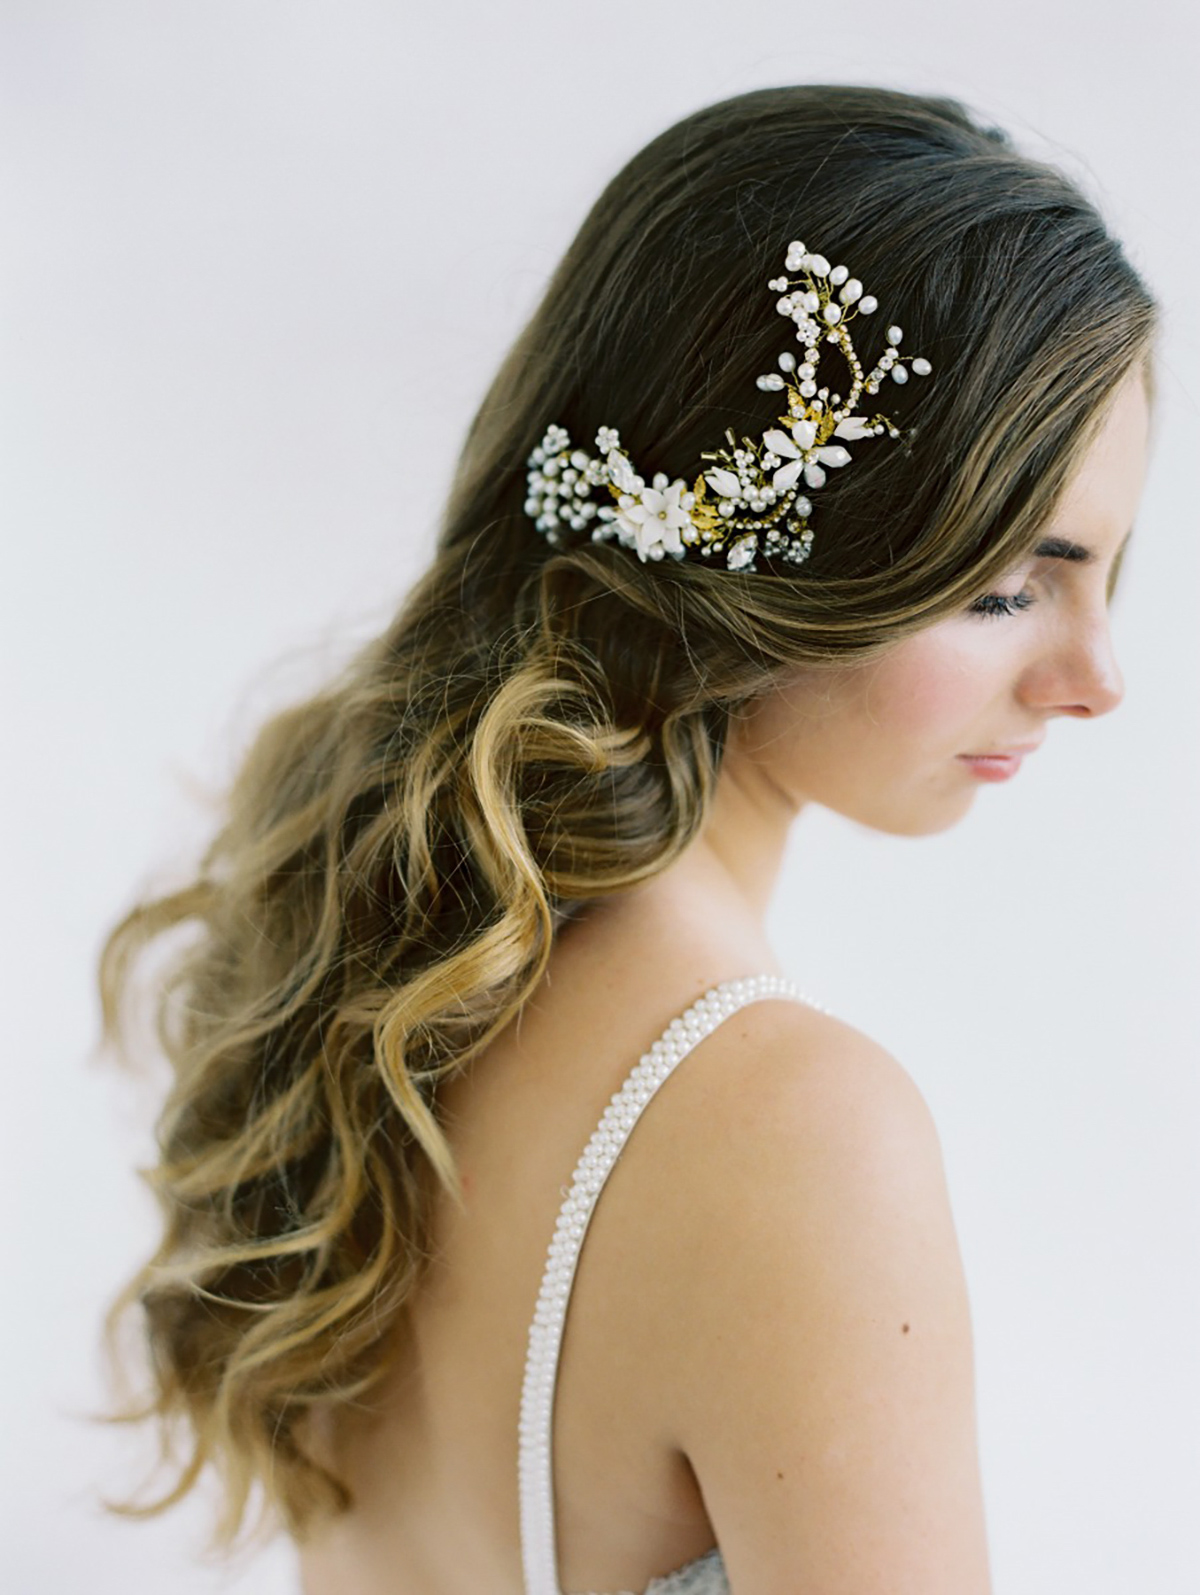 La Belle - classic, contemporary, fine art and romantic handmade wedding veils, headpieces and bridal adornments.